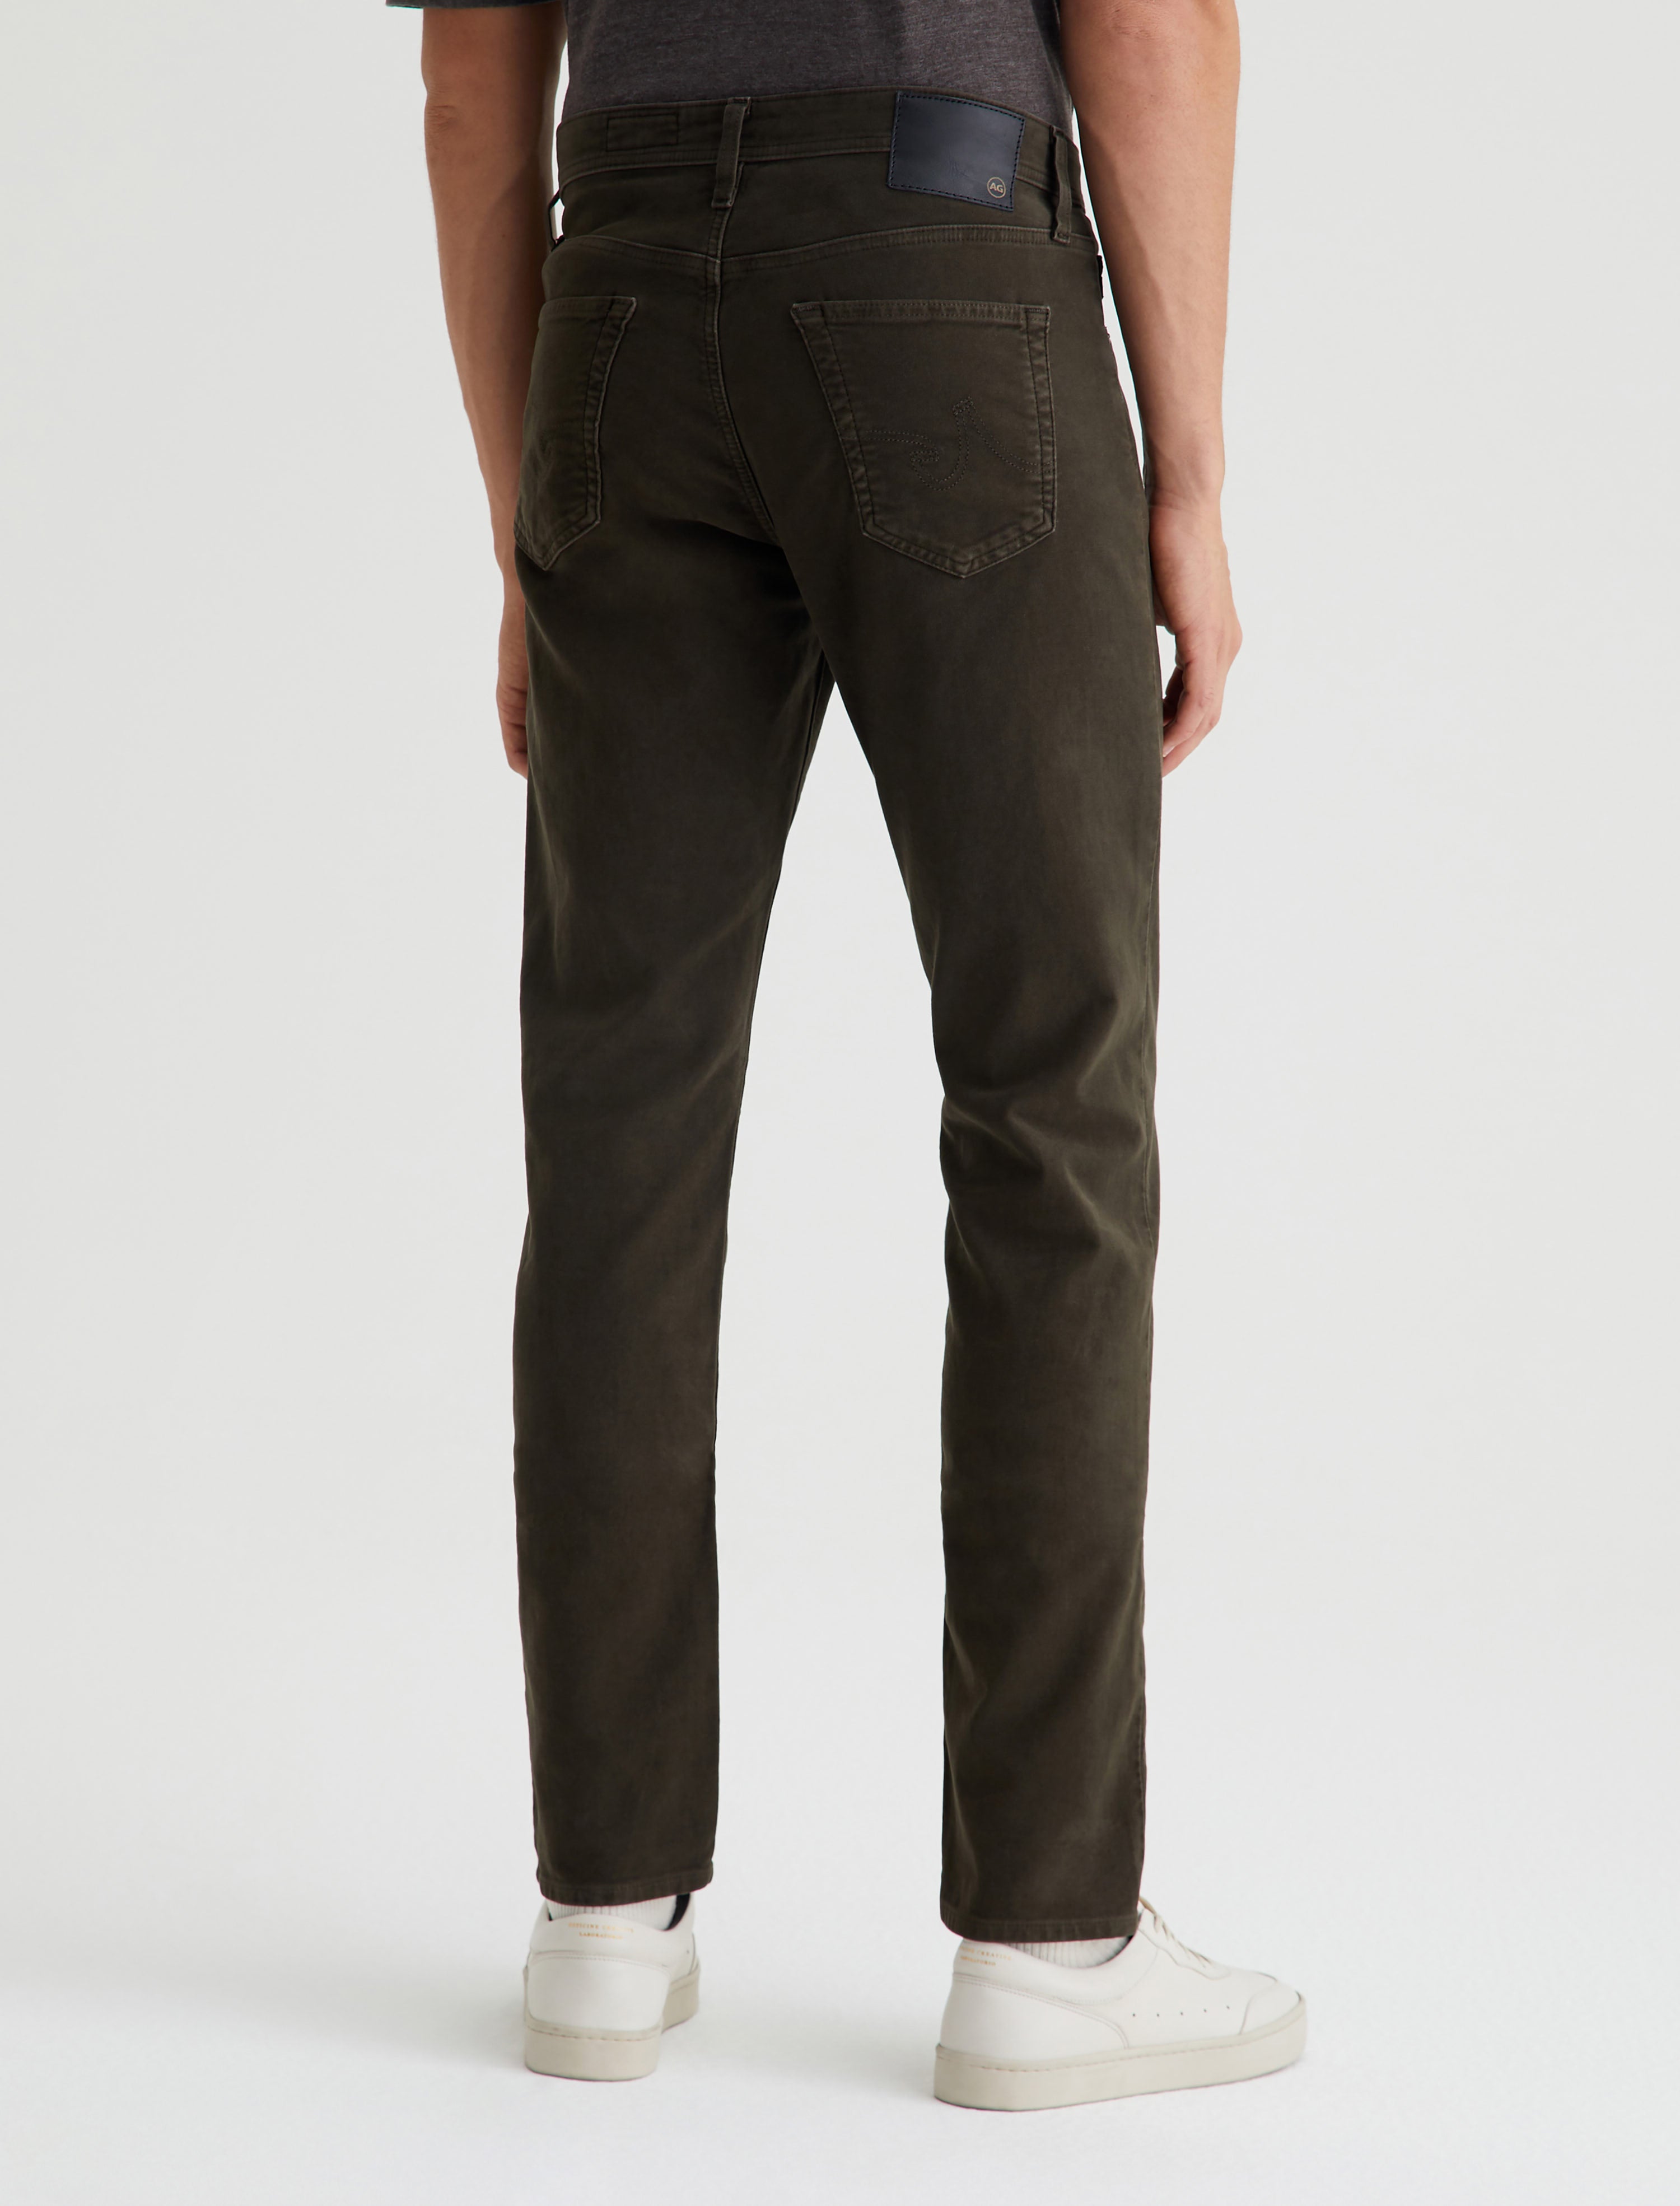 Buy MONTE CARLO Brown Dark Wash Mens Jeans | Shoppers Stop